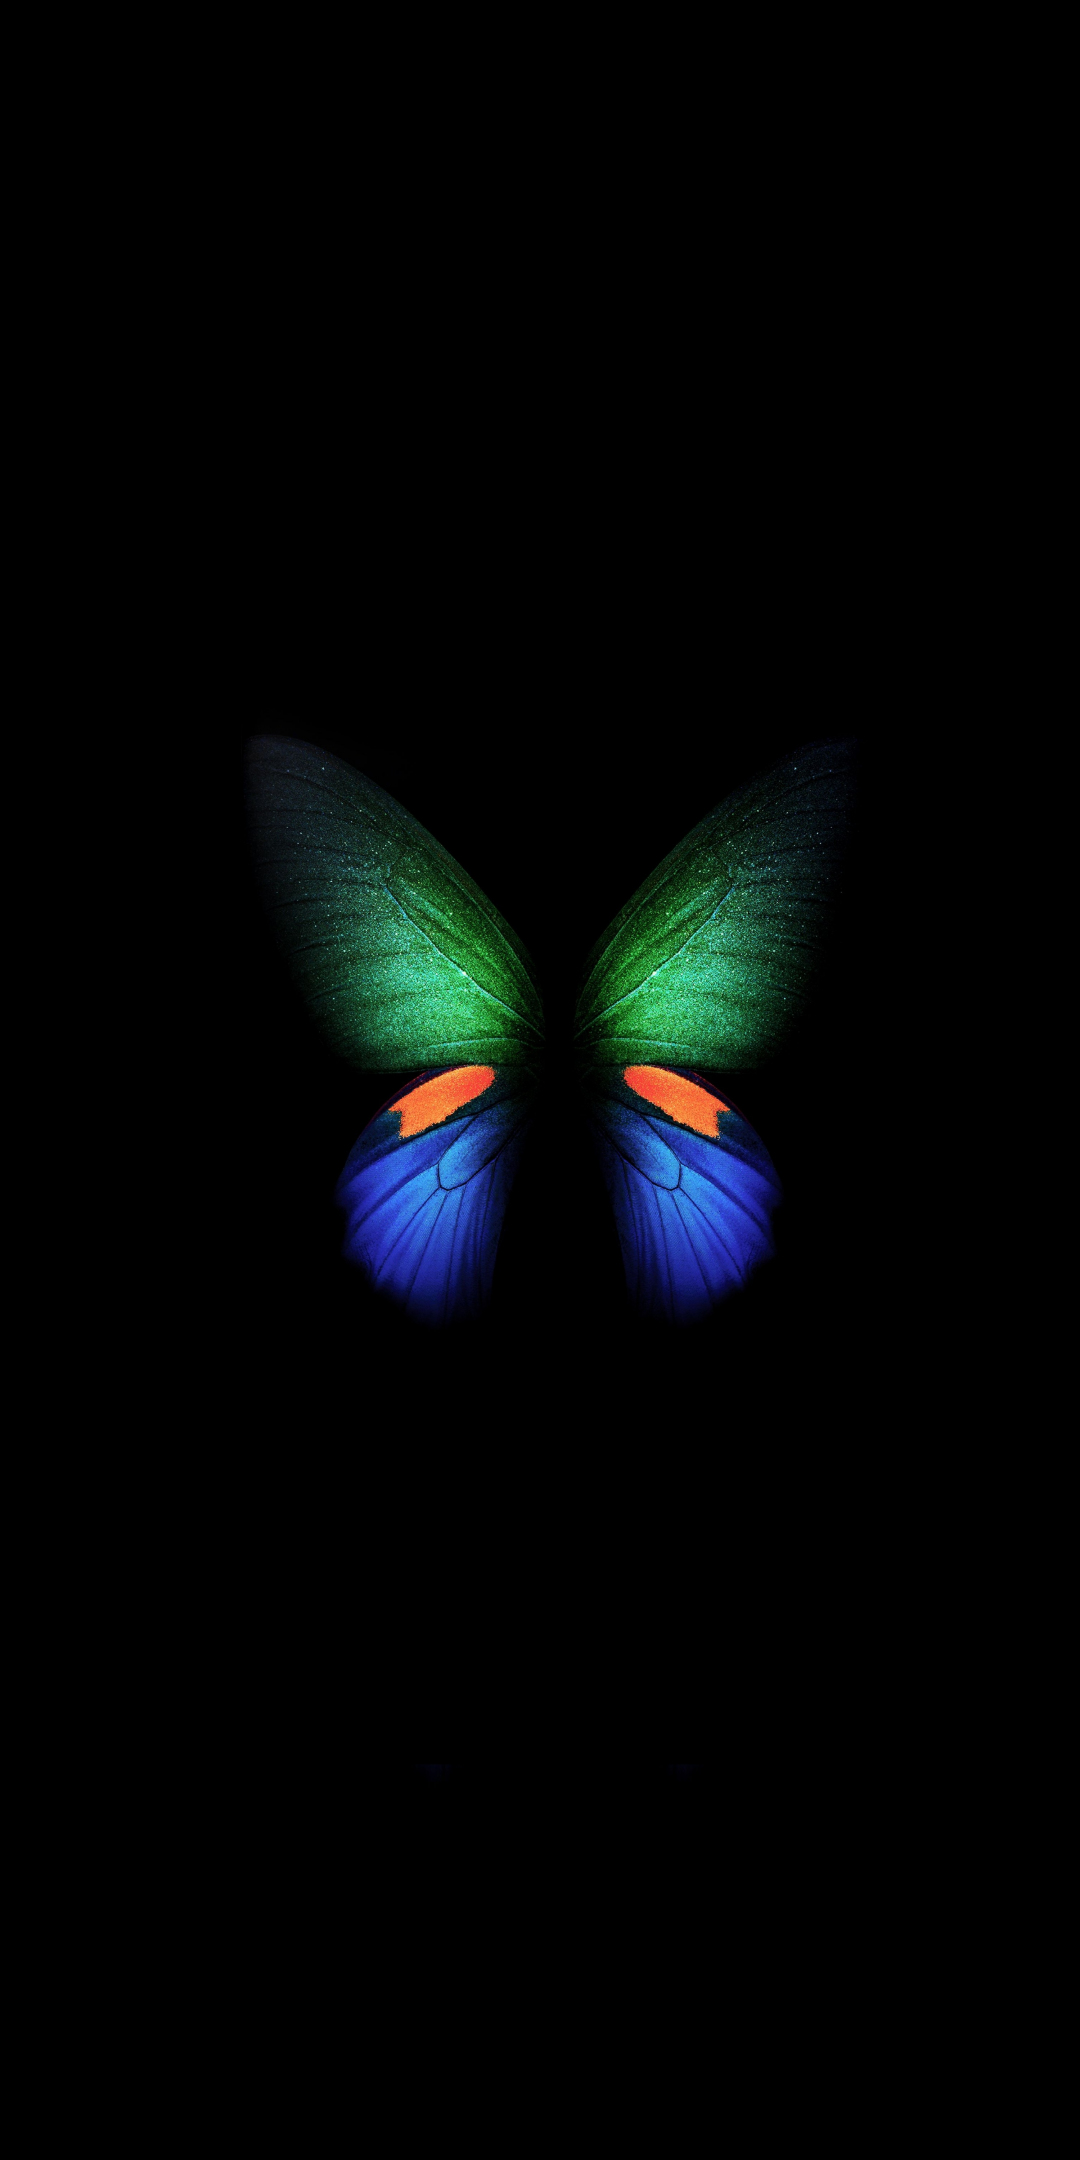 Download 1080x2160 wallpaper samsung galaxy fold, green-blue butterfly